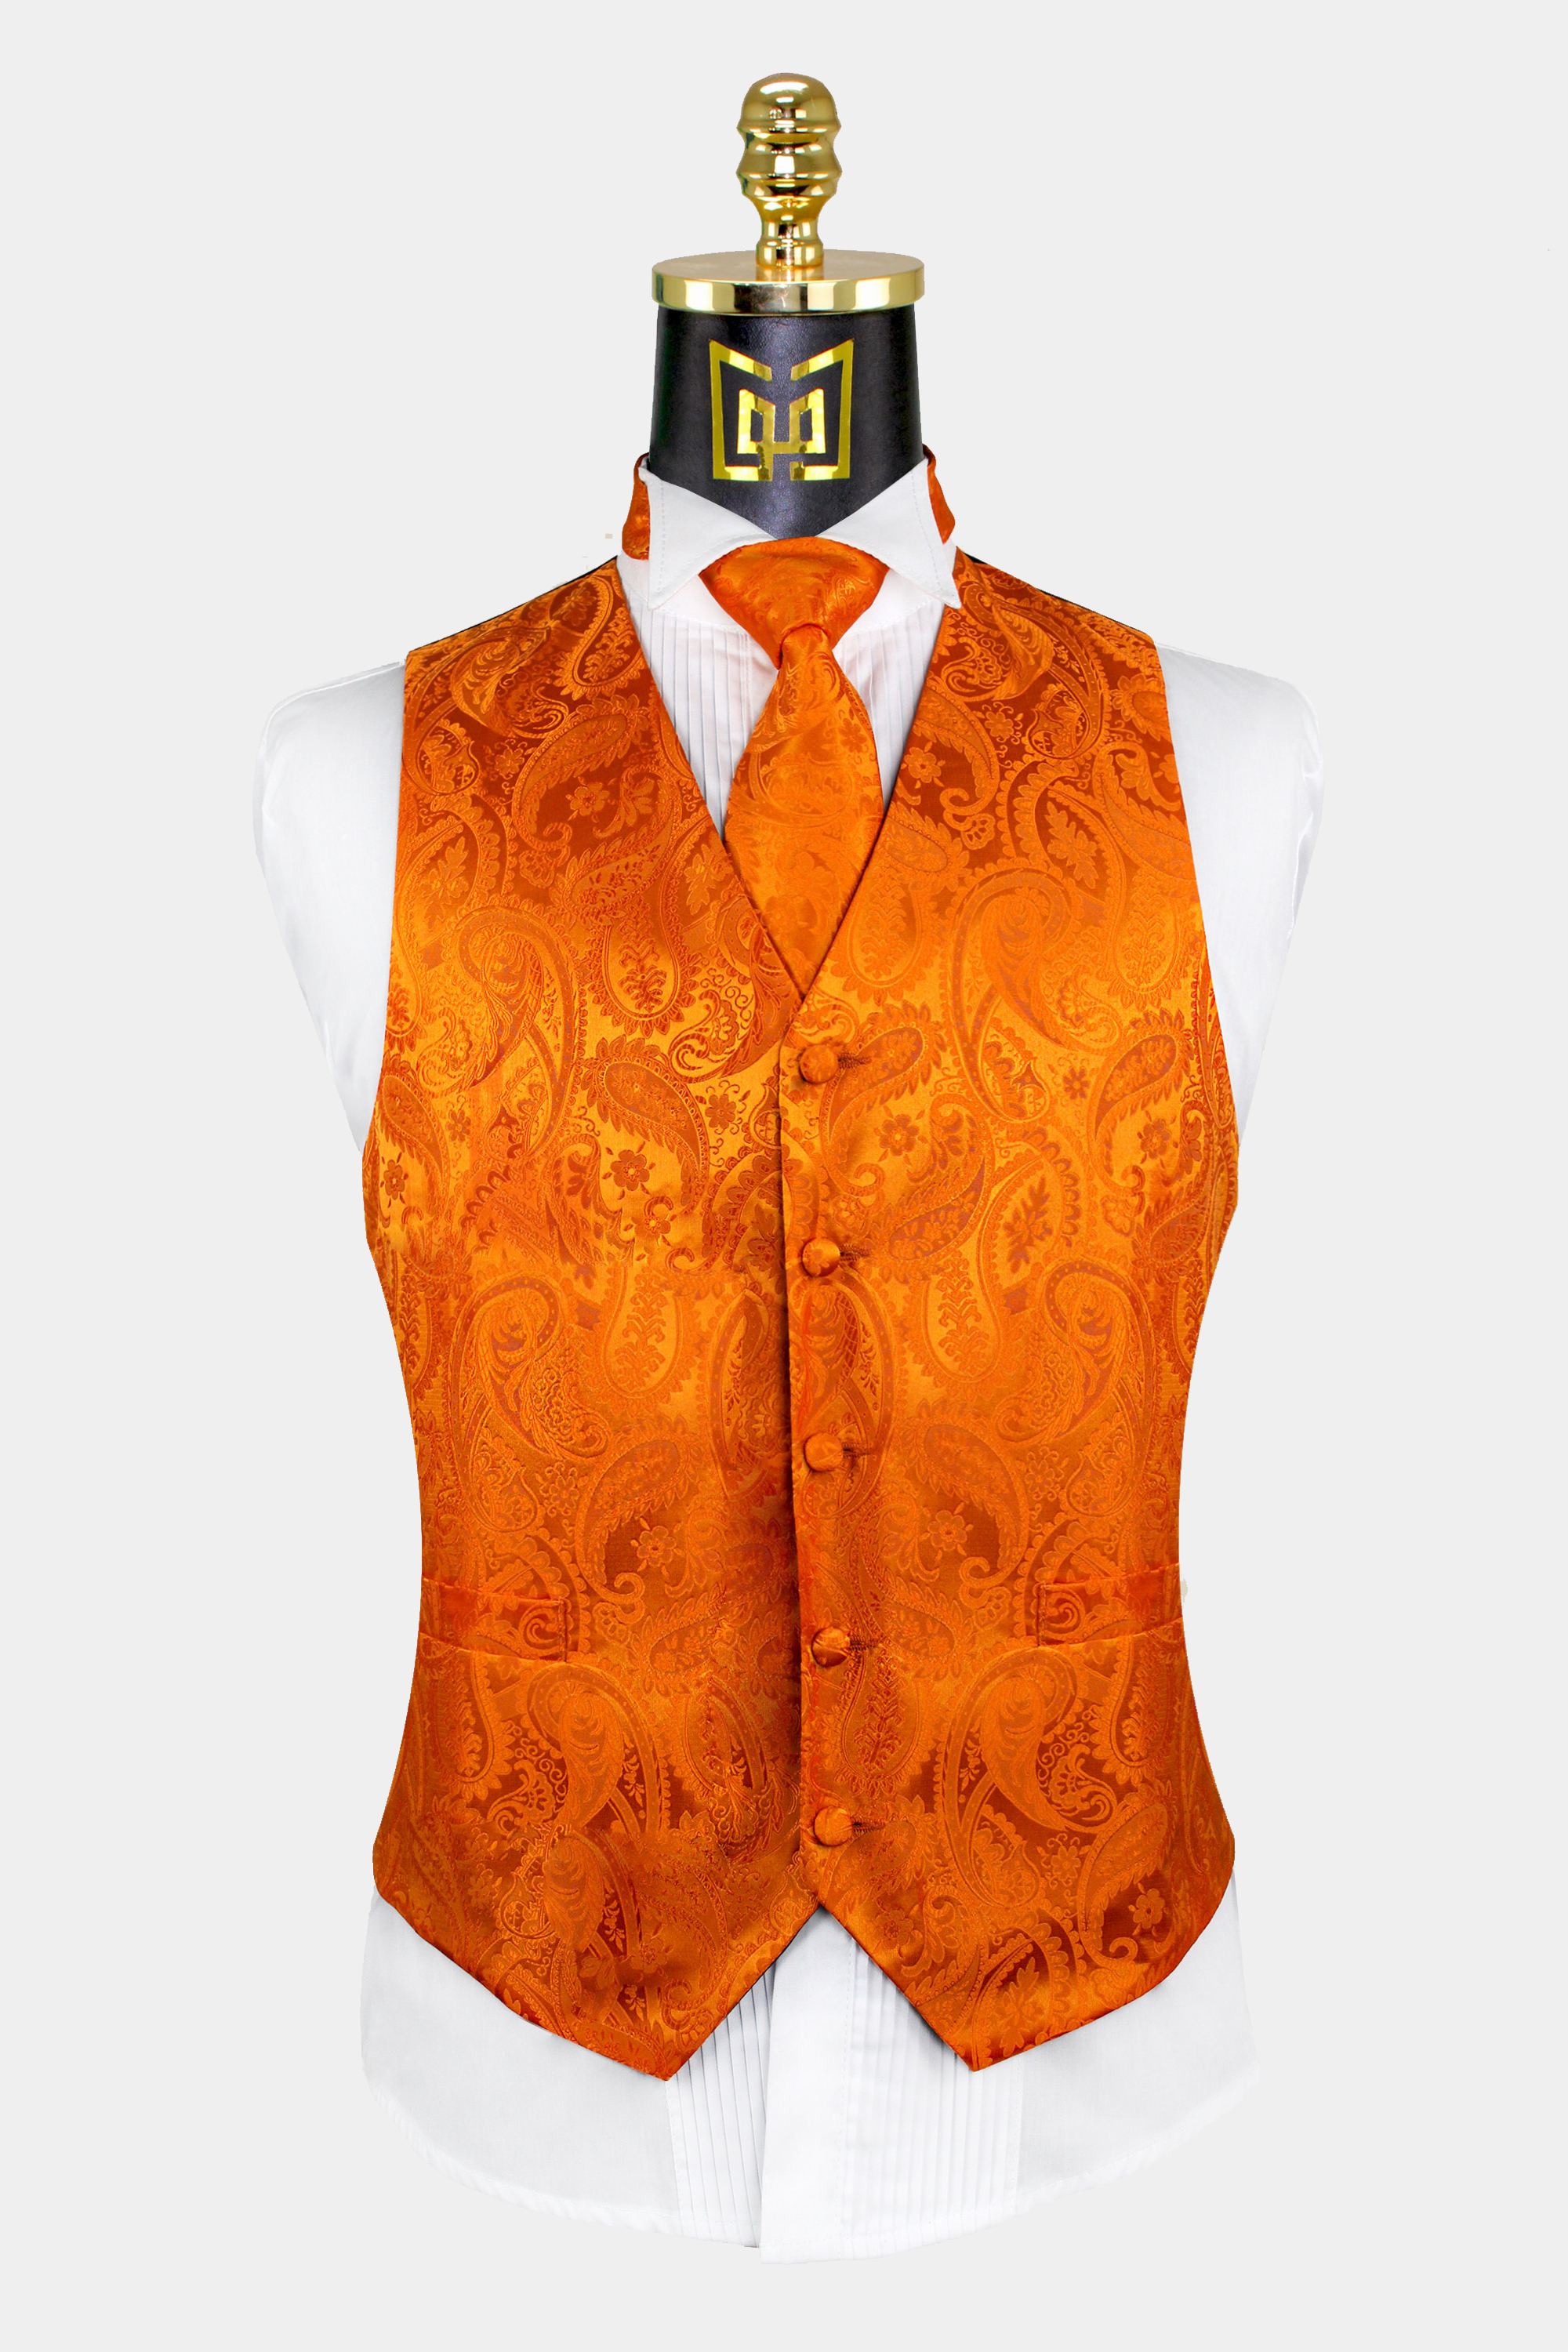 New Men's Formal Vest Tuxedo Waistcoat_necktie set paisley orange wedding prom 